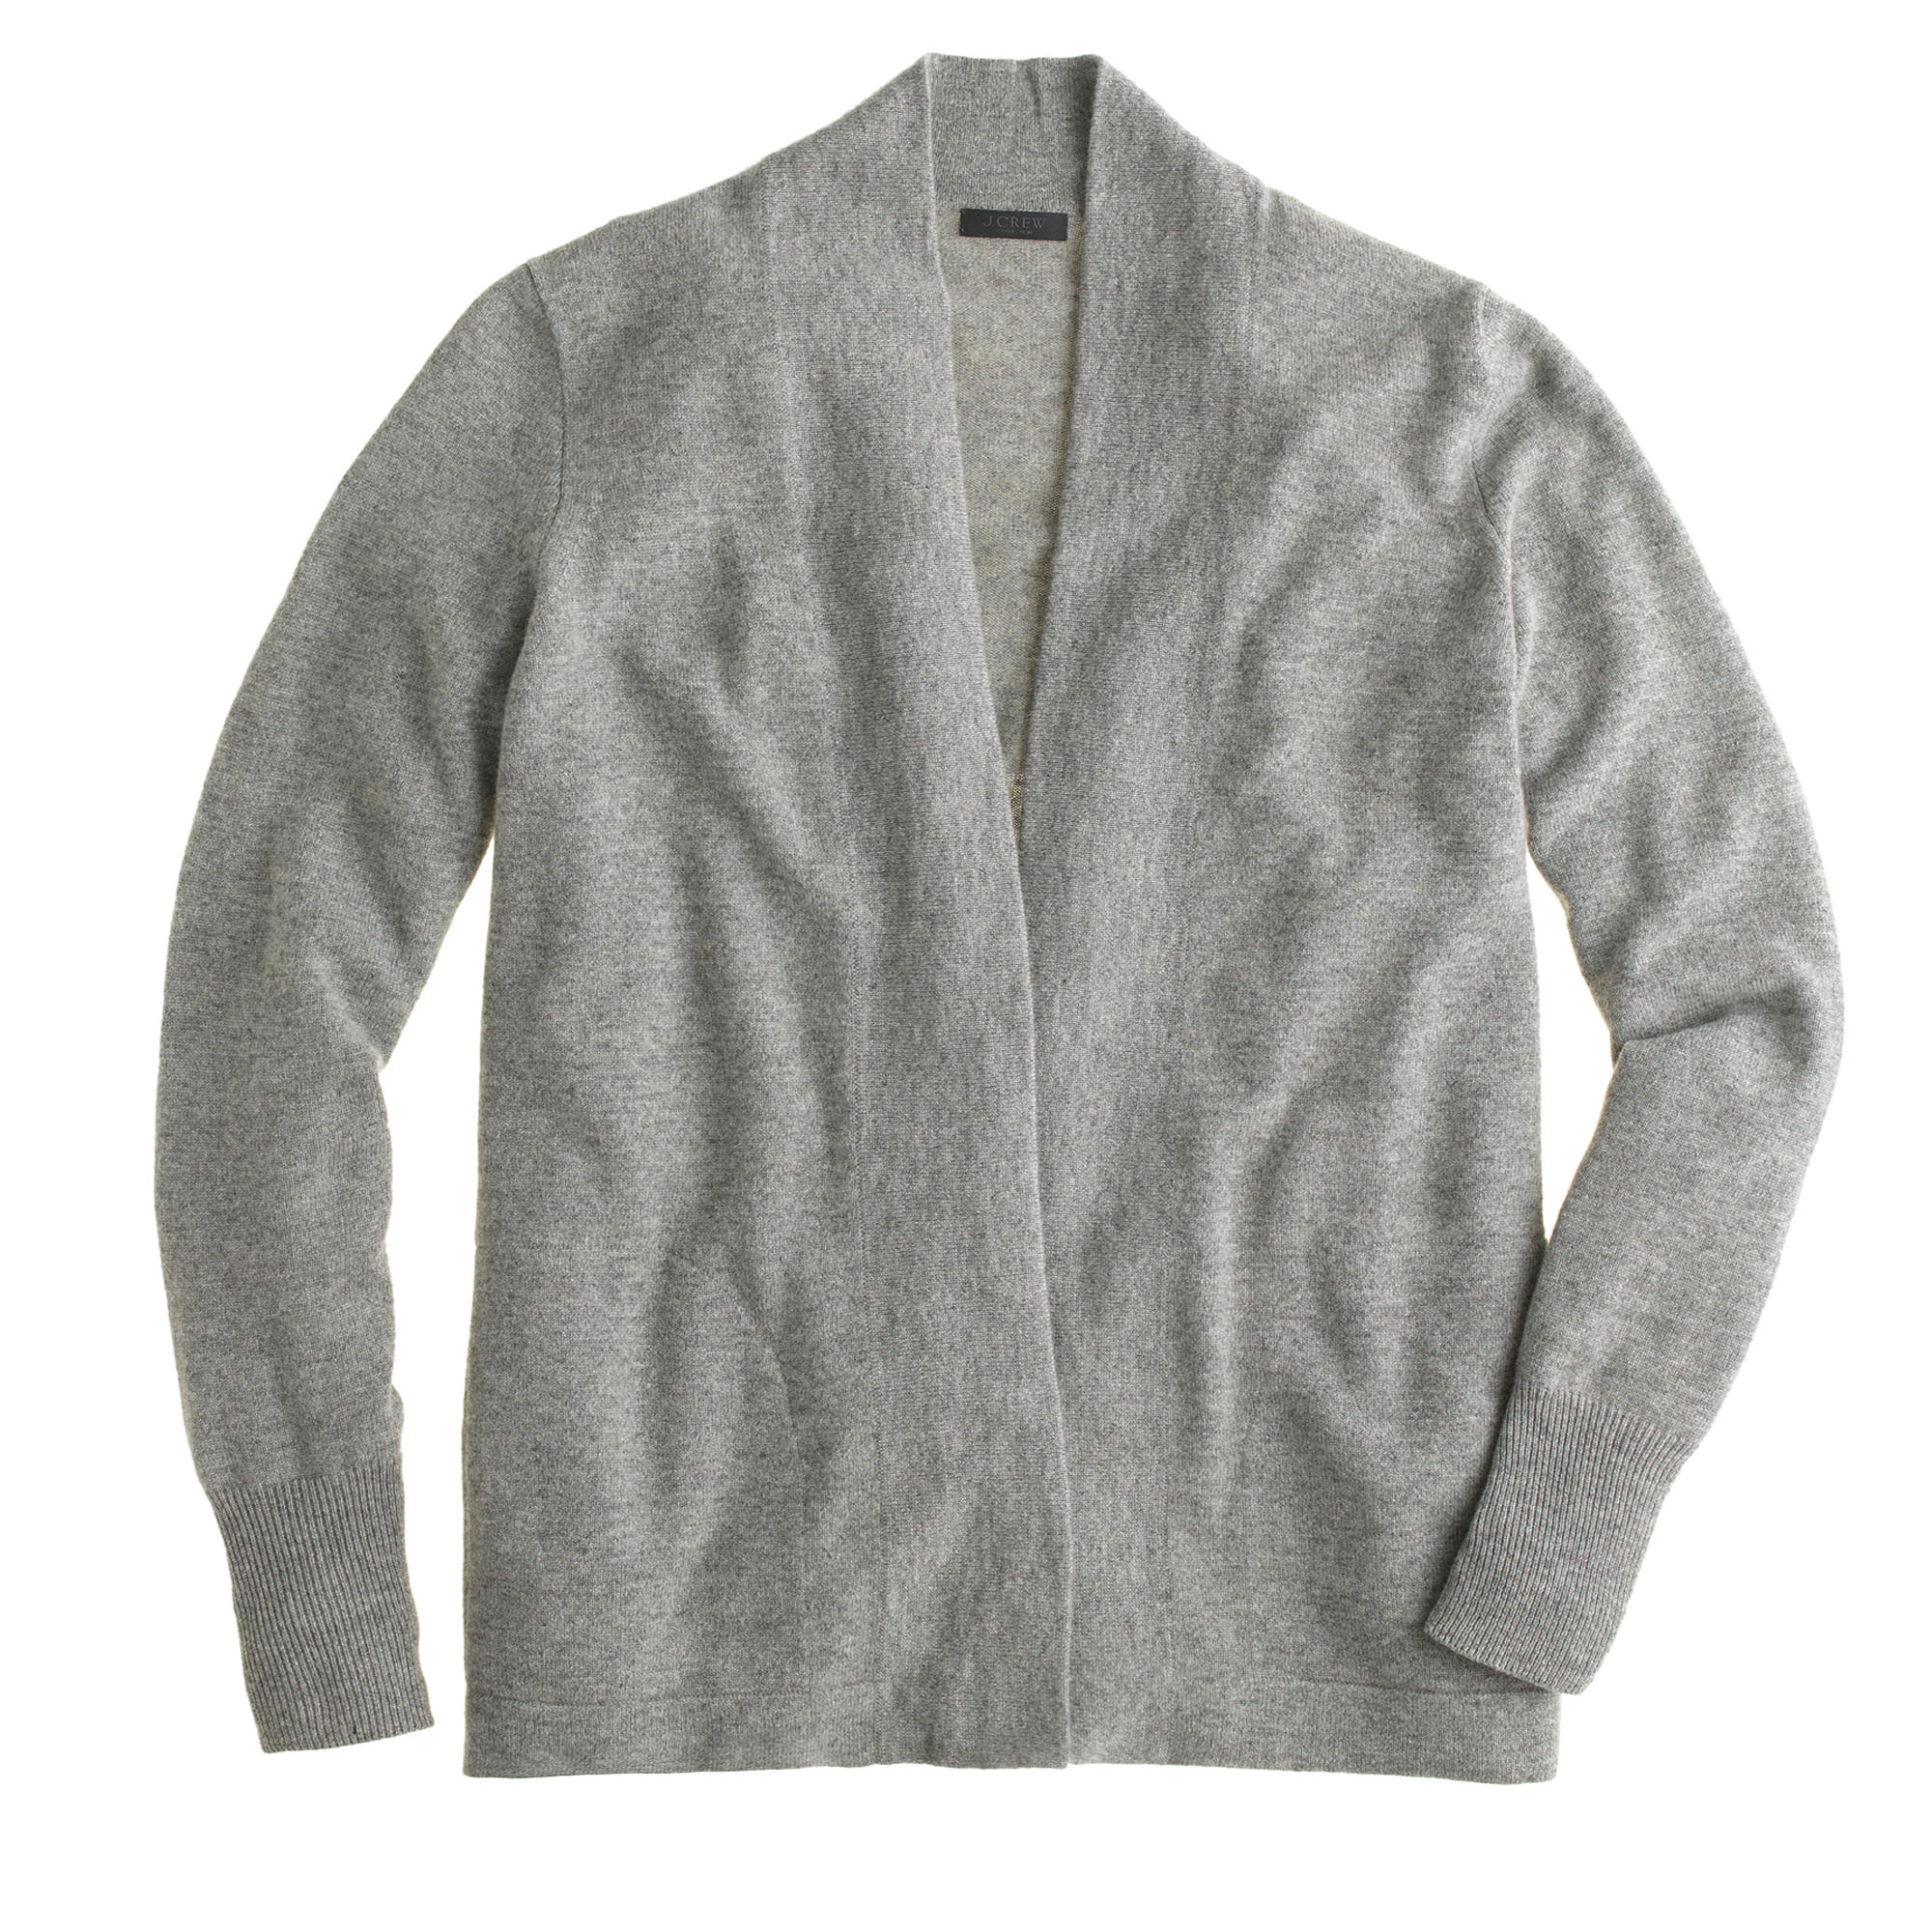 Cashmere Sweater Opener - Gray Cardigan Sweater